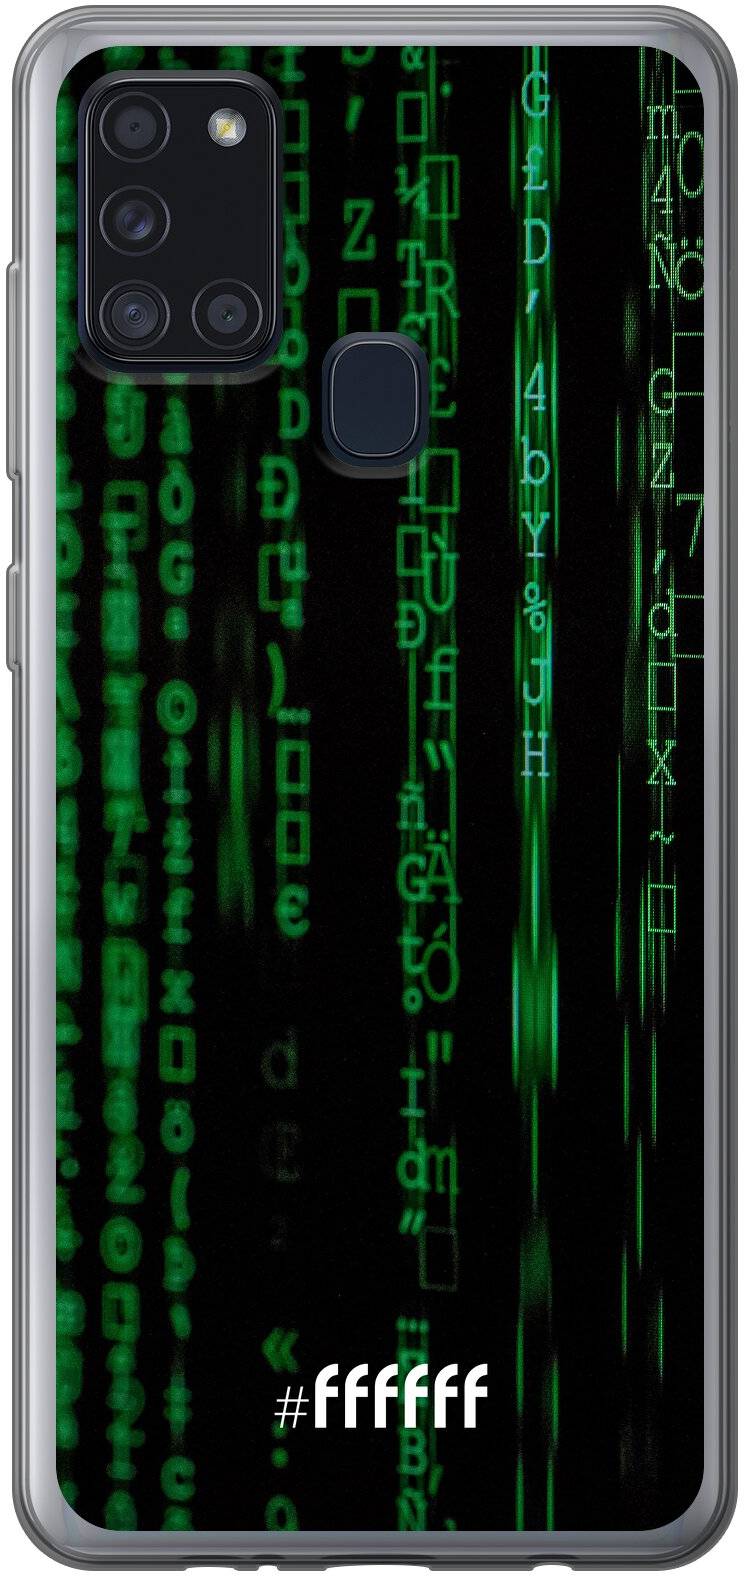 Hacking The Matrix Galaxy A21s